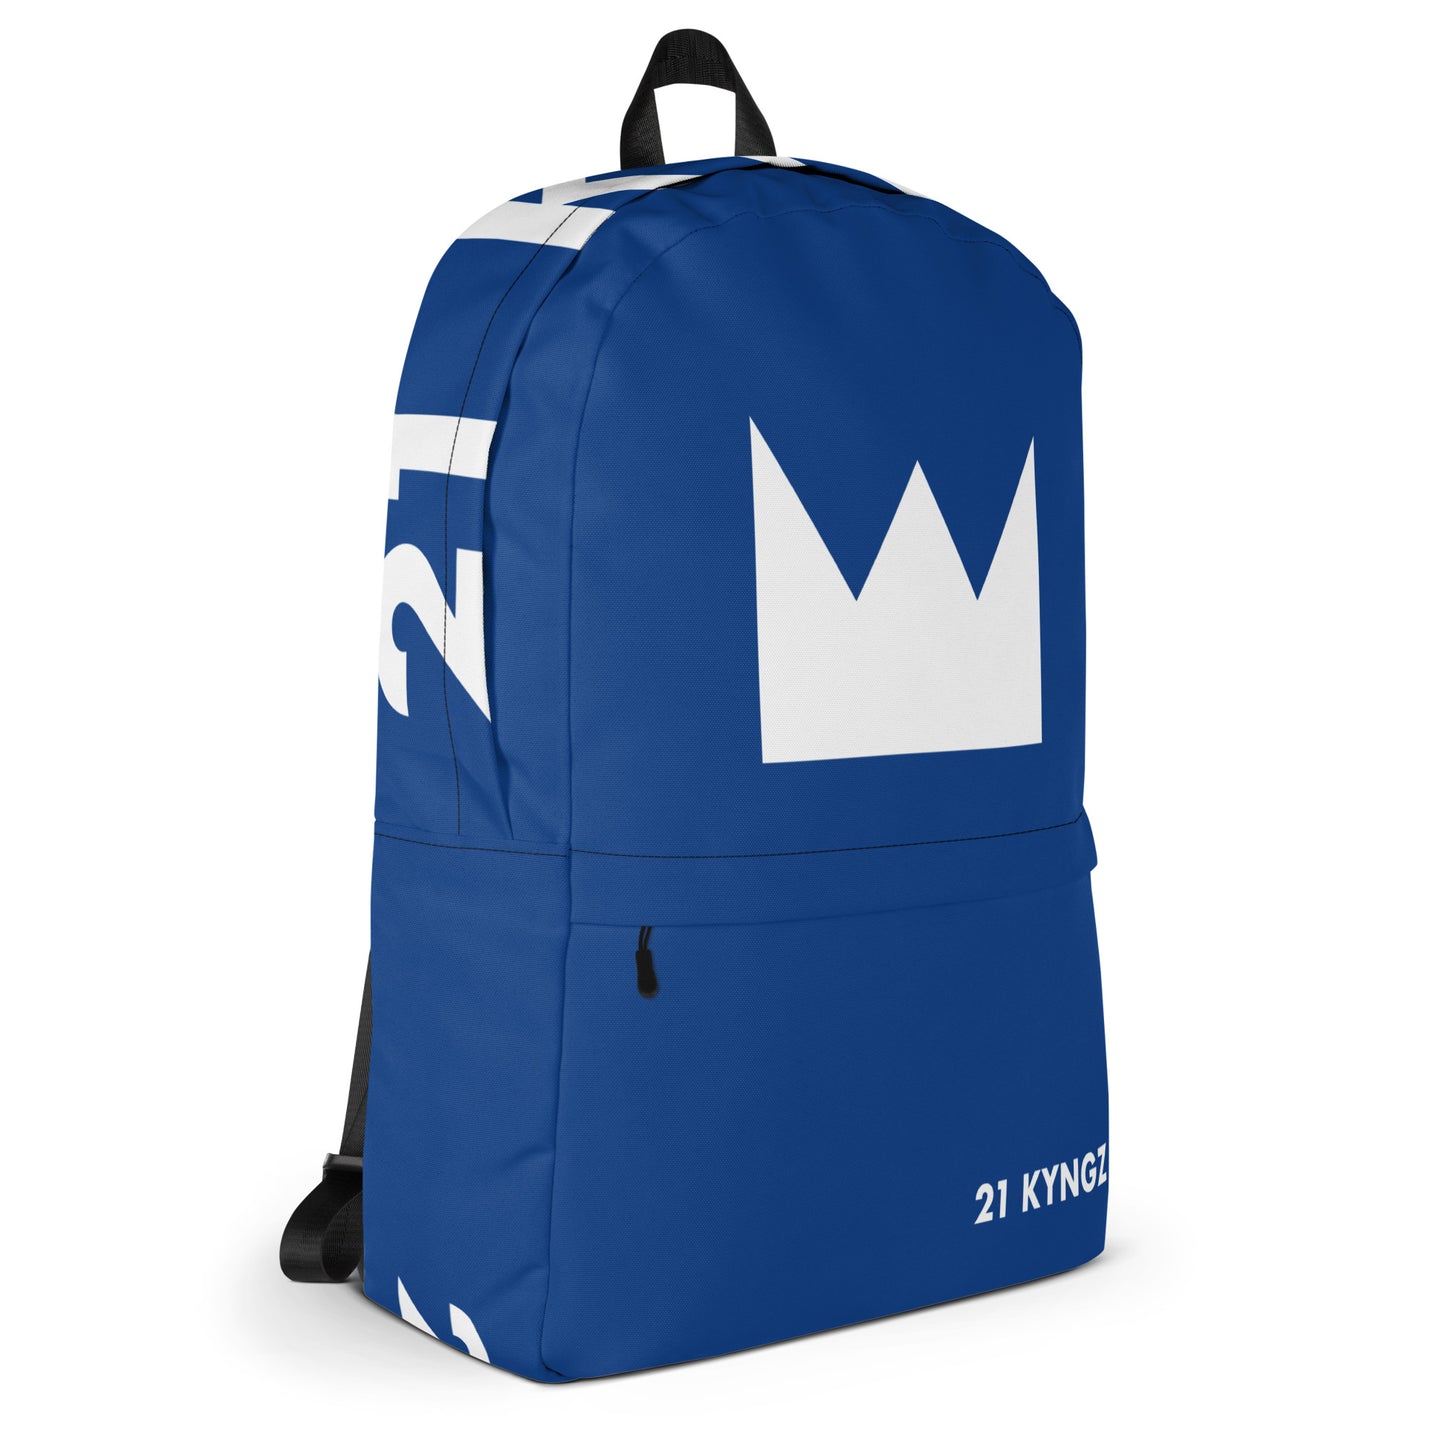 21 KYNGZ Blue Backpack